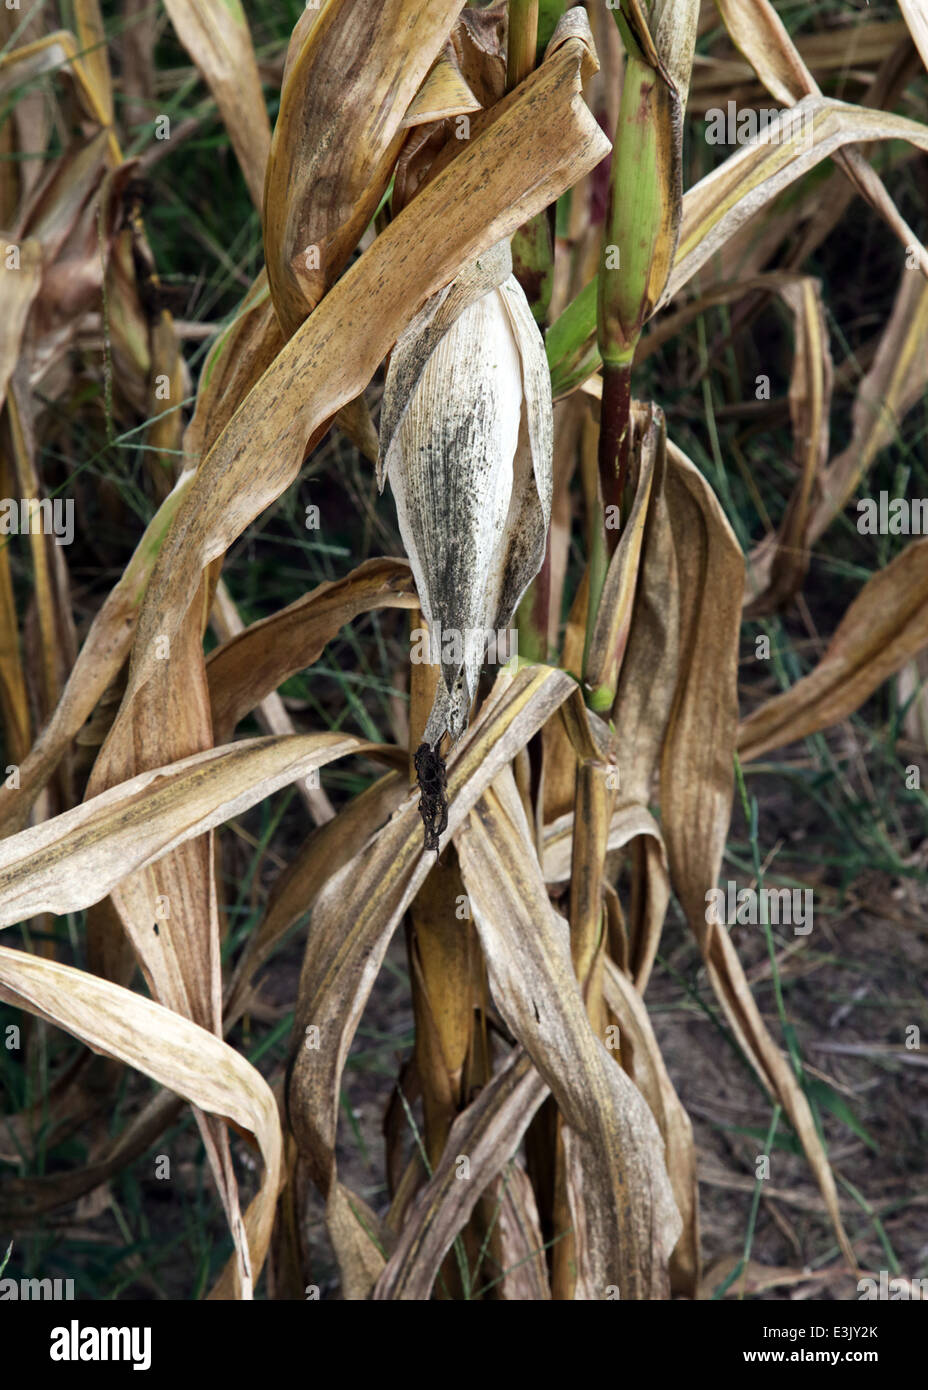 Corn field Columbia, South Carolina by Brian Jordan/Alamy Live News Stock Photo